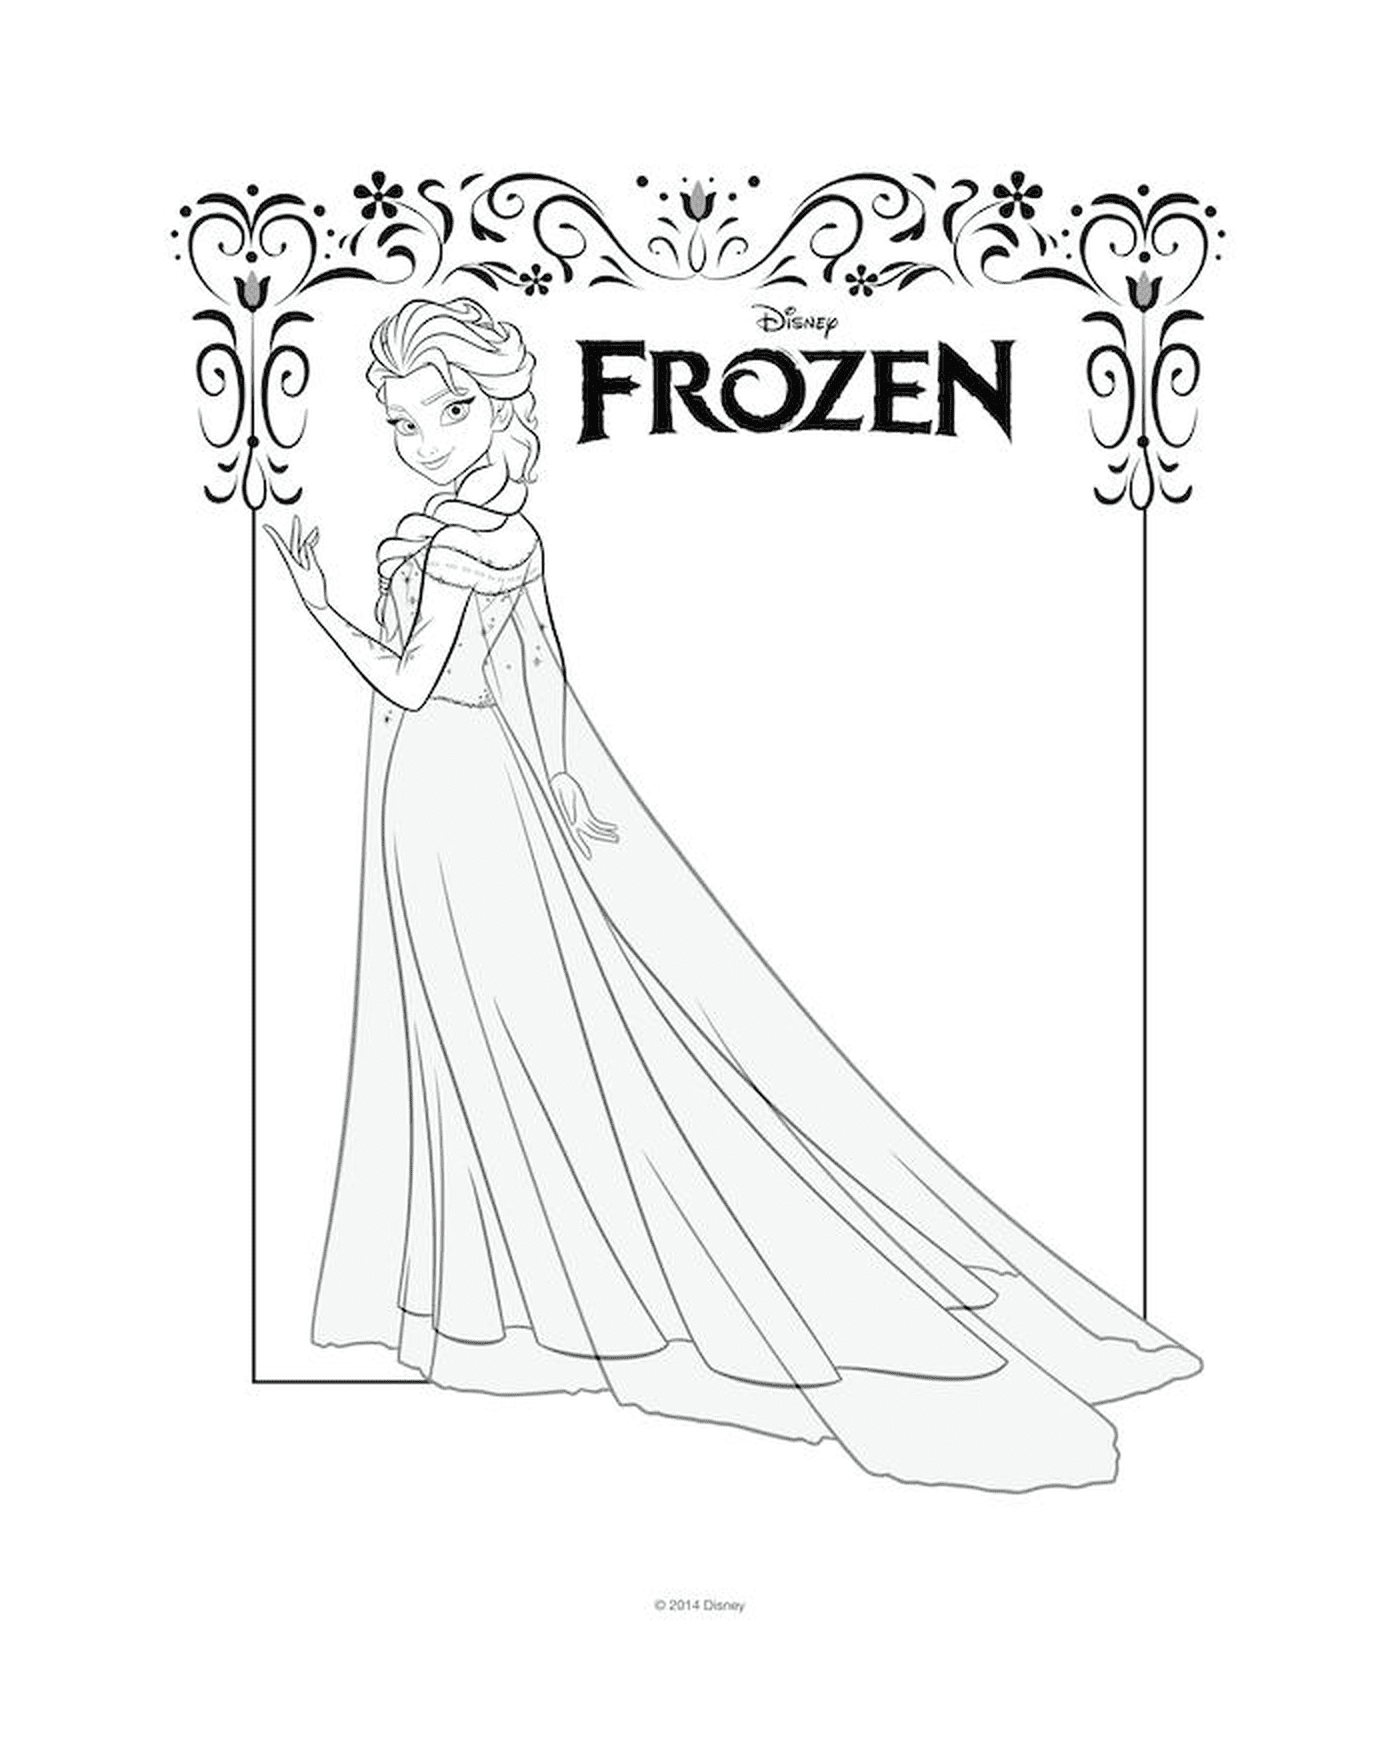  Reina de las Nieves Elsa, Disney 